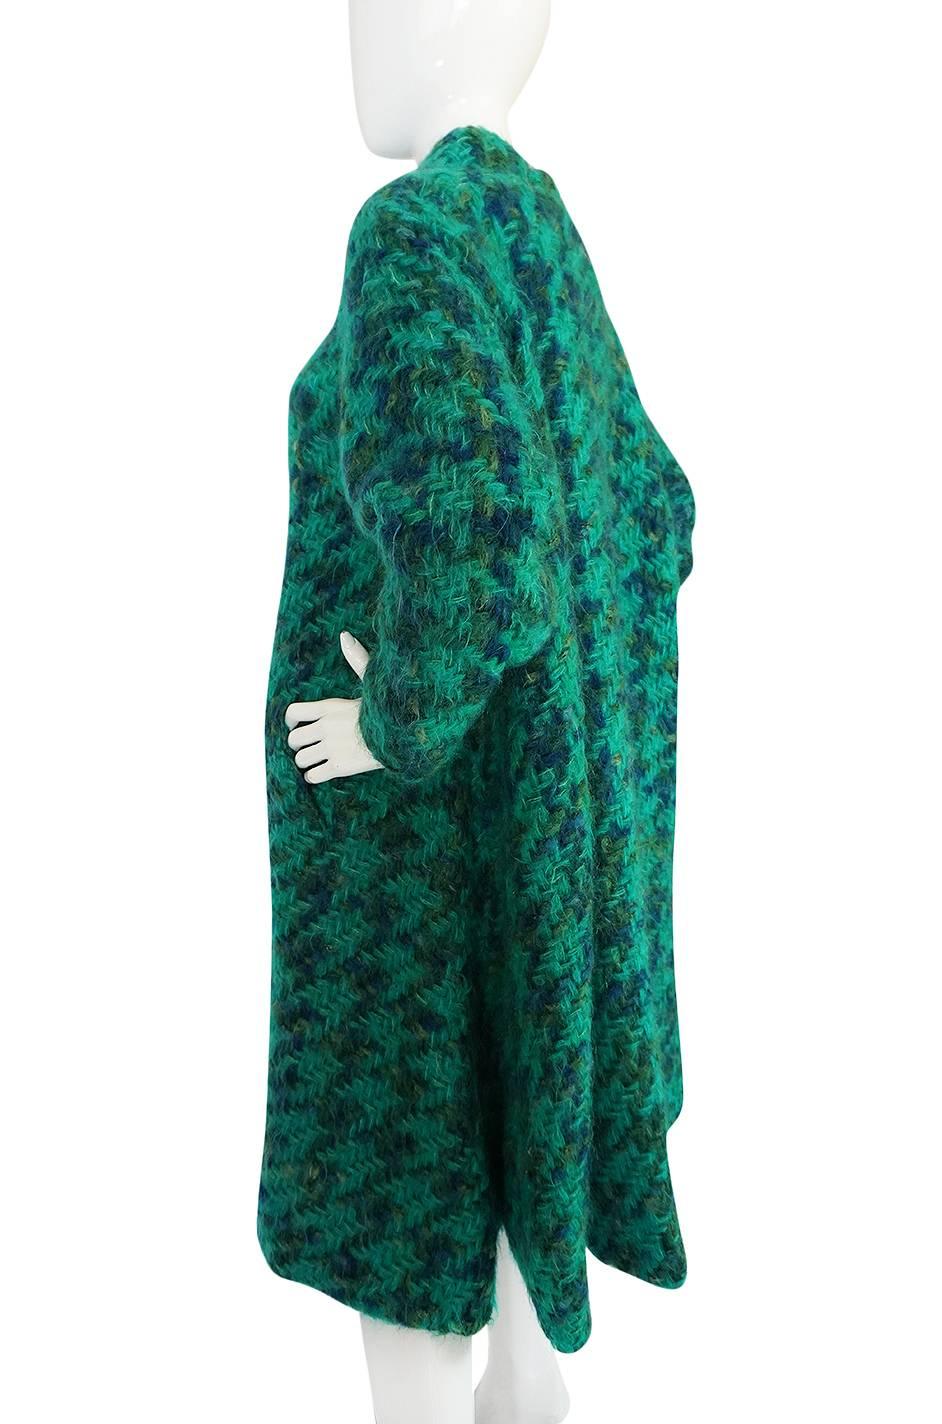 Fabulous 1960s Sybil Connolly Green Mohair Swing Coat 1